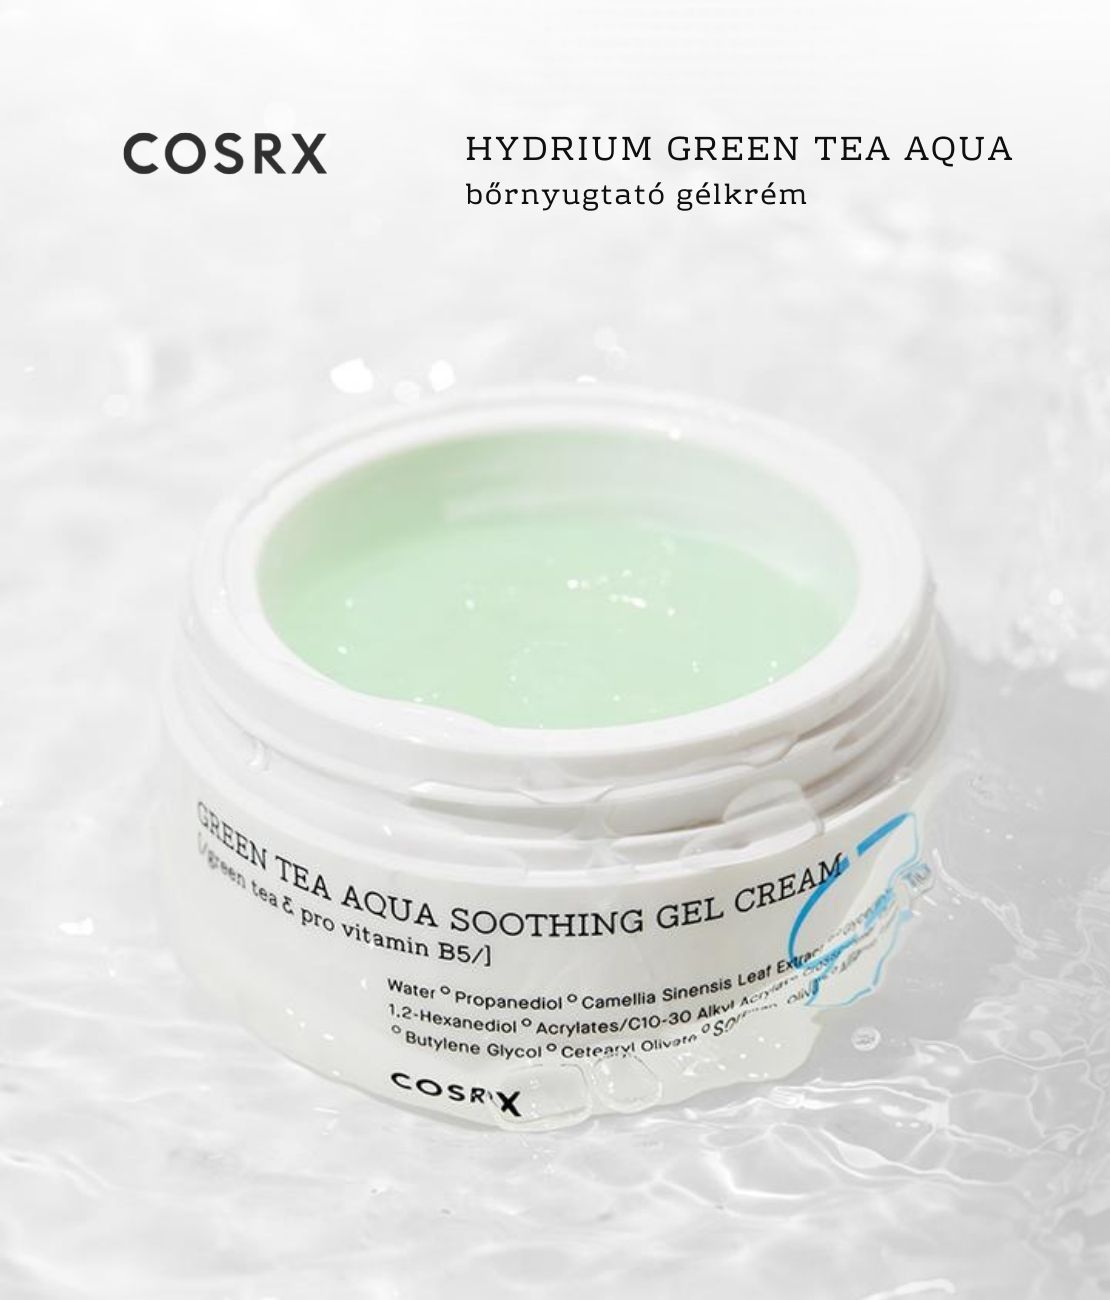 COSRX-Hydrium-green-tea-aqua-bornyugtato-gelkrem-des